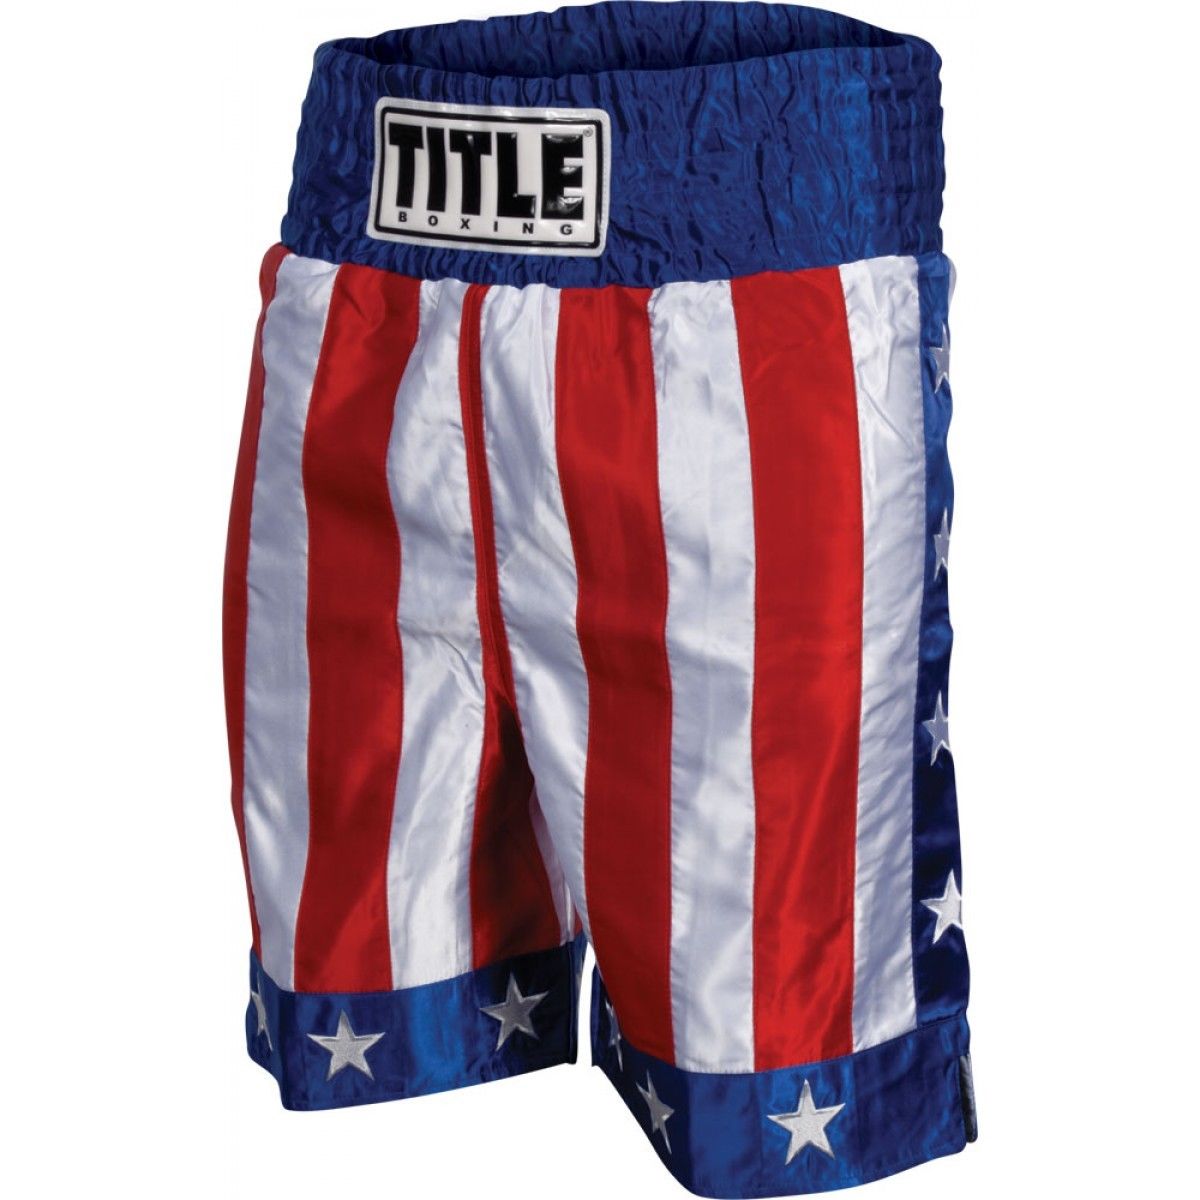 TITLE Boxing American タイ